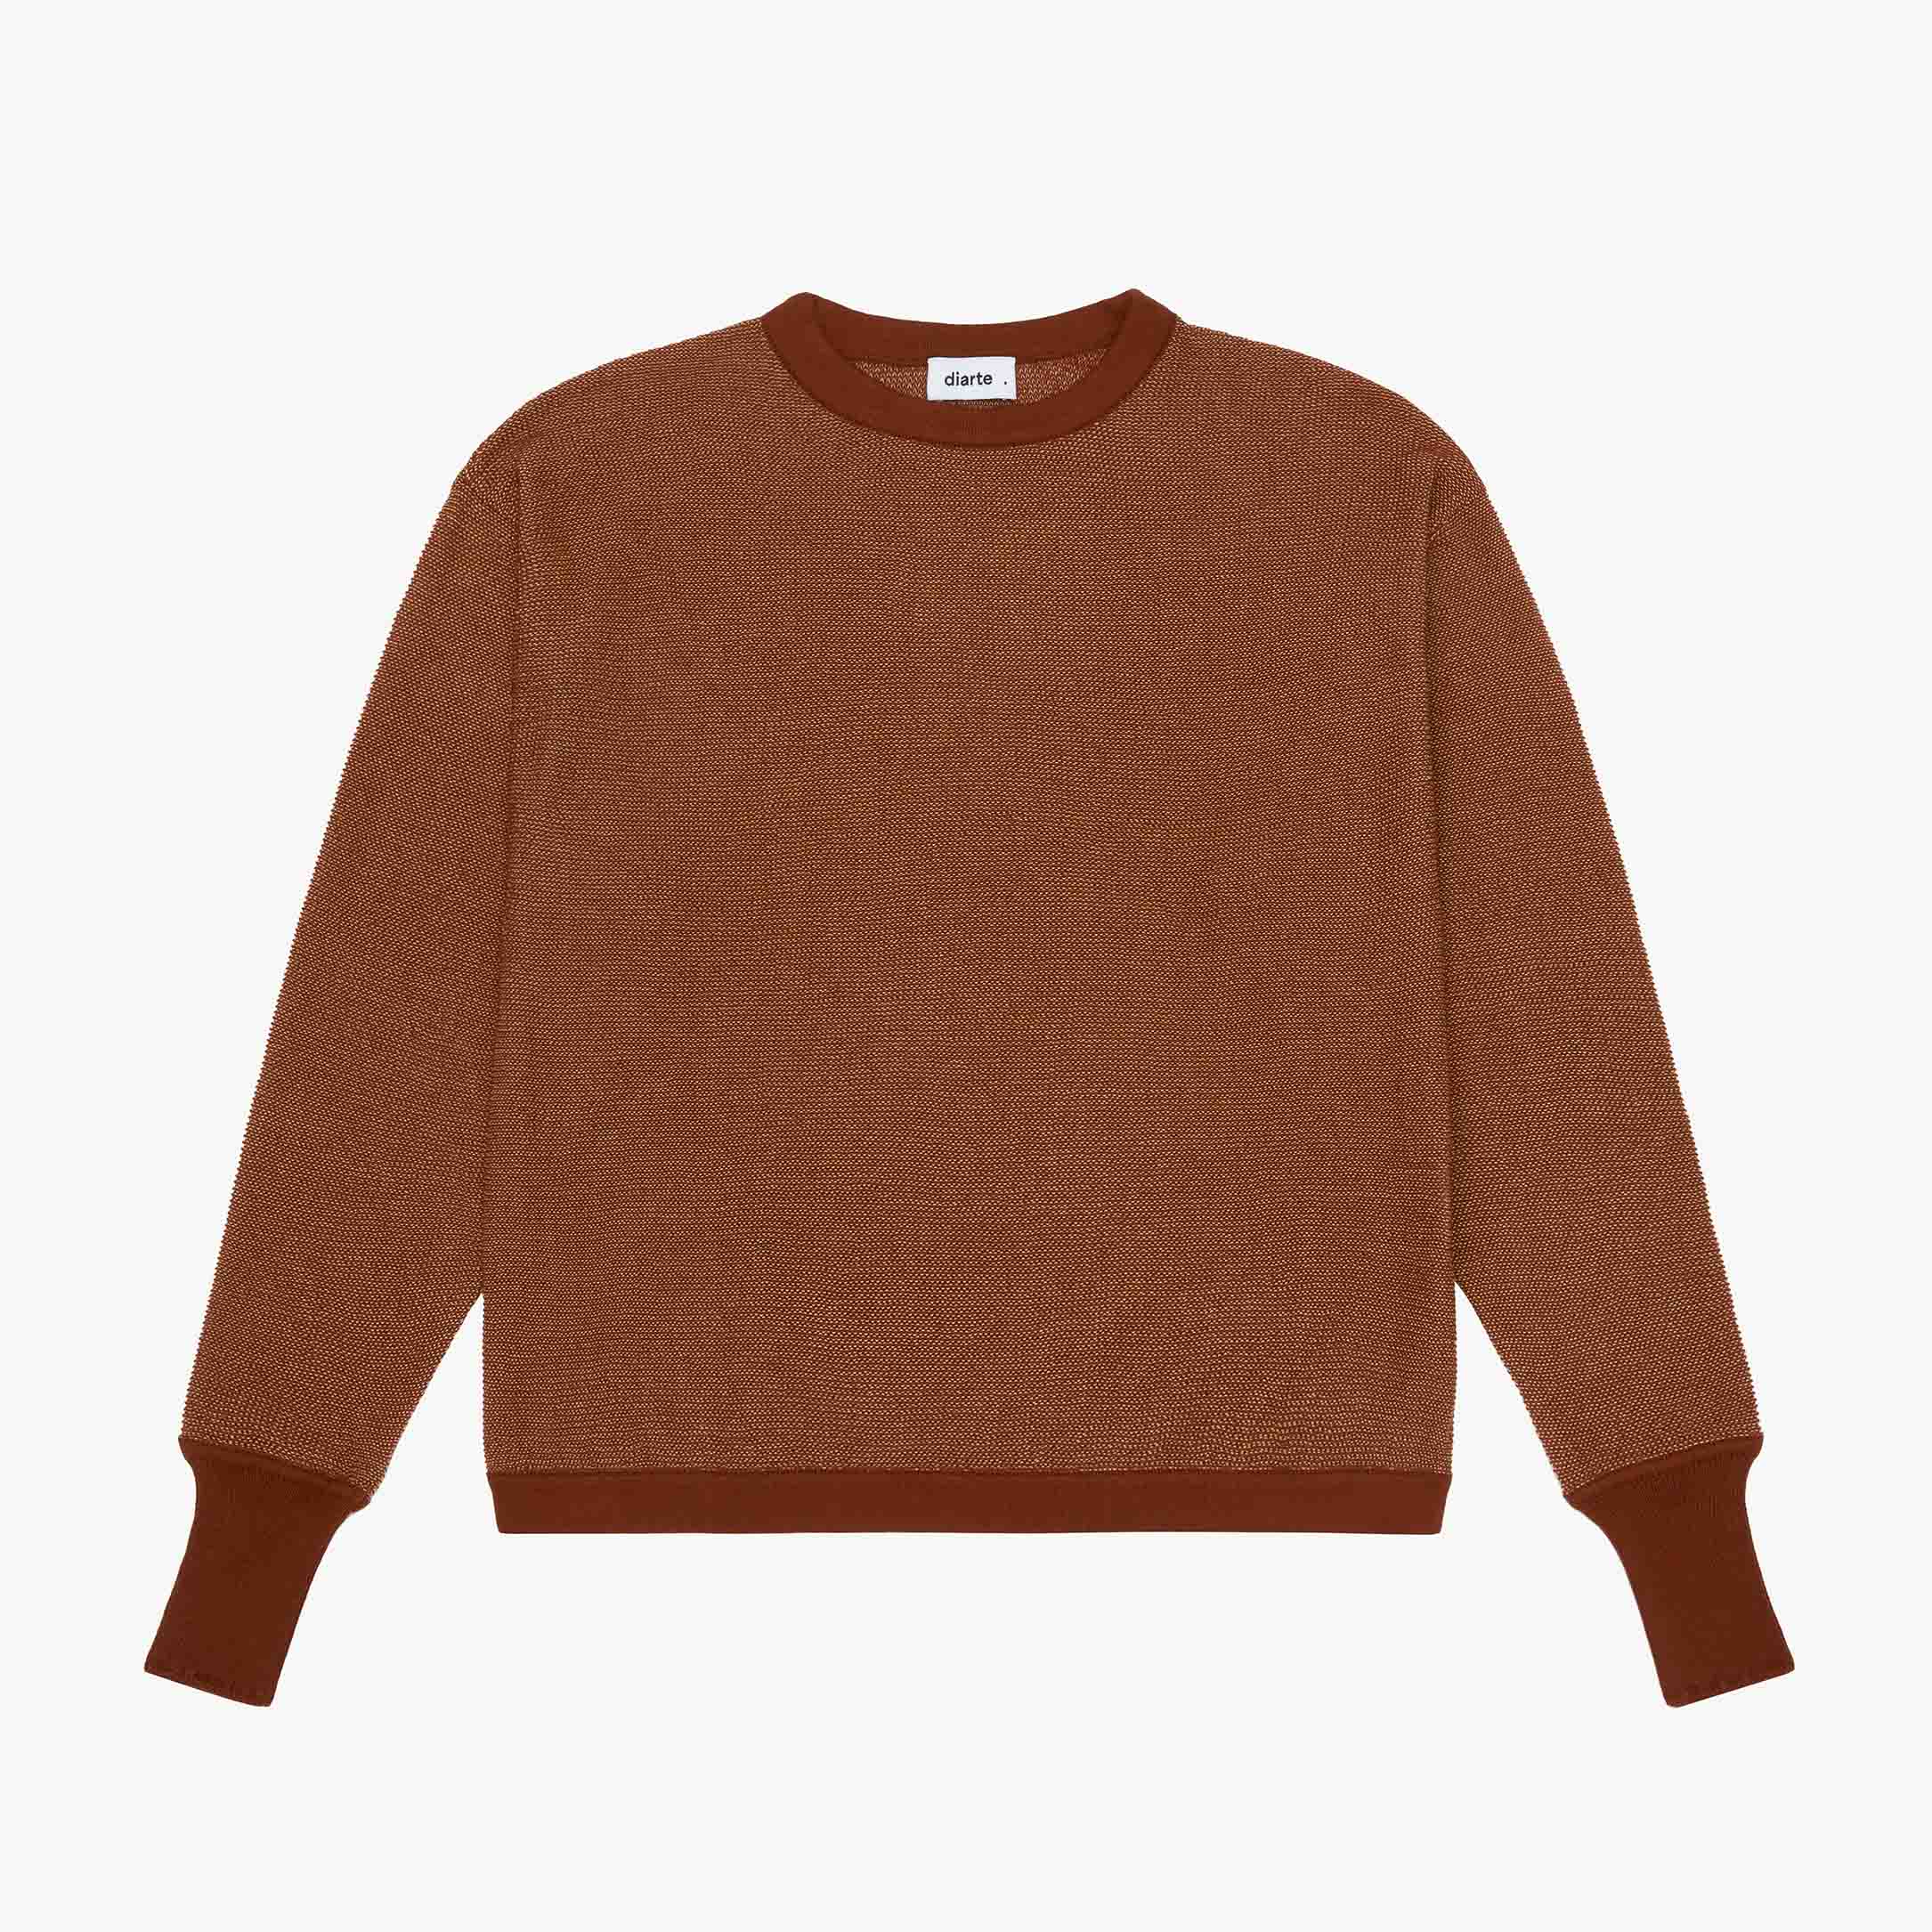 diarte-brick-omega-cotton-sweater